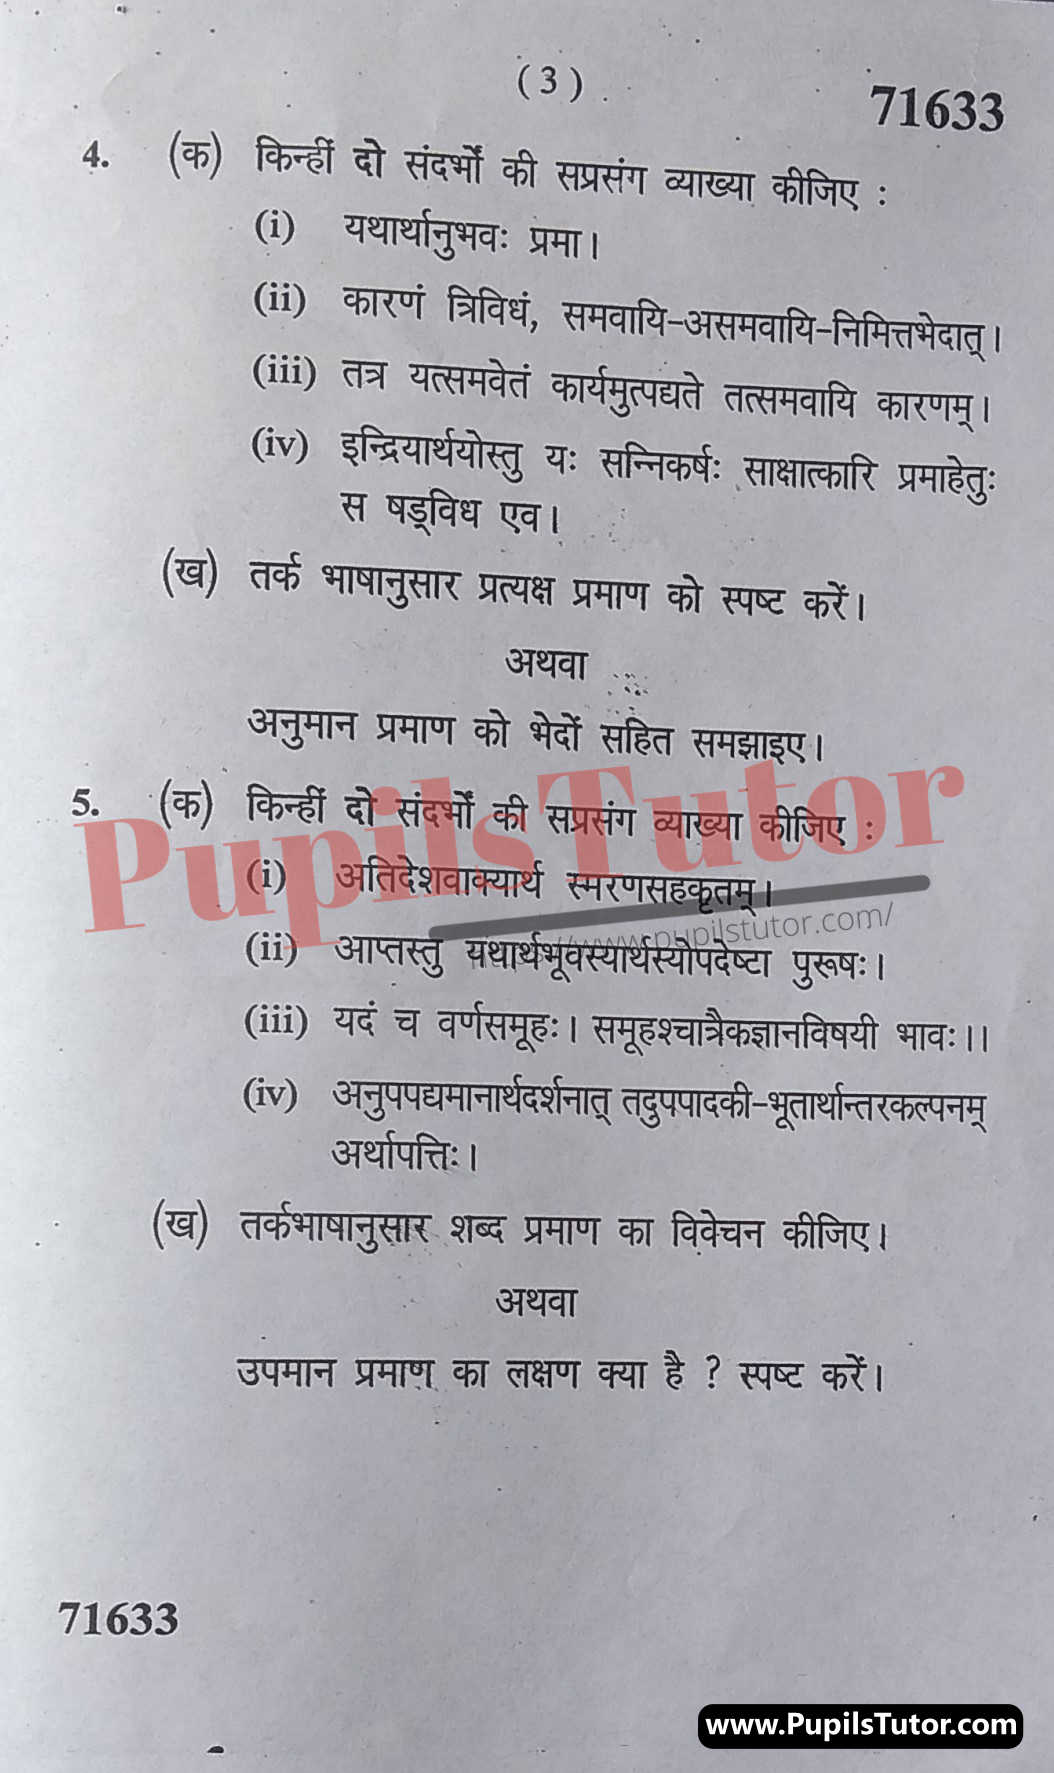 Free Download PDF Of M.D. University M.A. [Sanskrit] First Semester Latest Question Paper For Sankhya Evam Nyaya Subject (Page 3) - https://www.pupilstutor.com